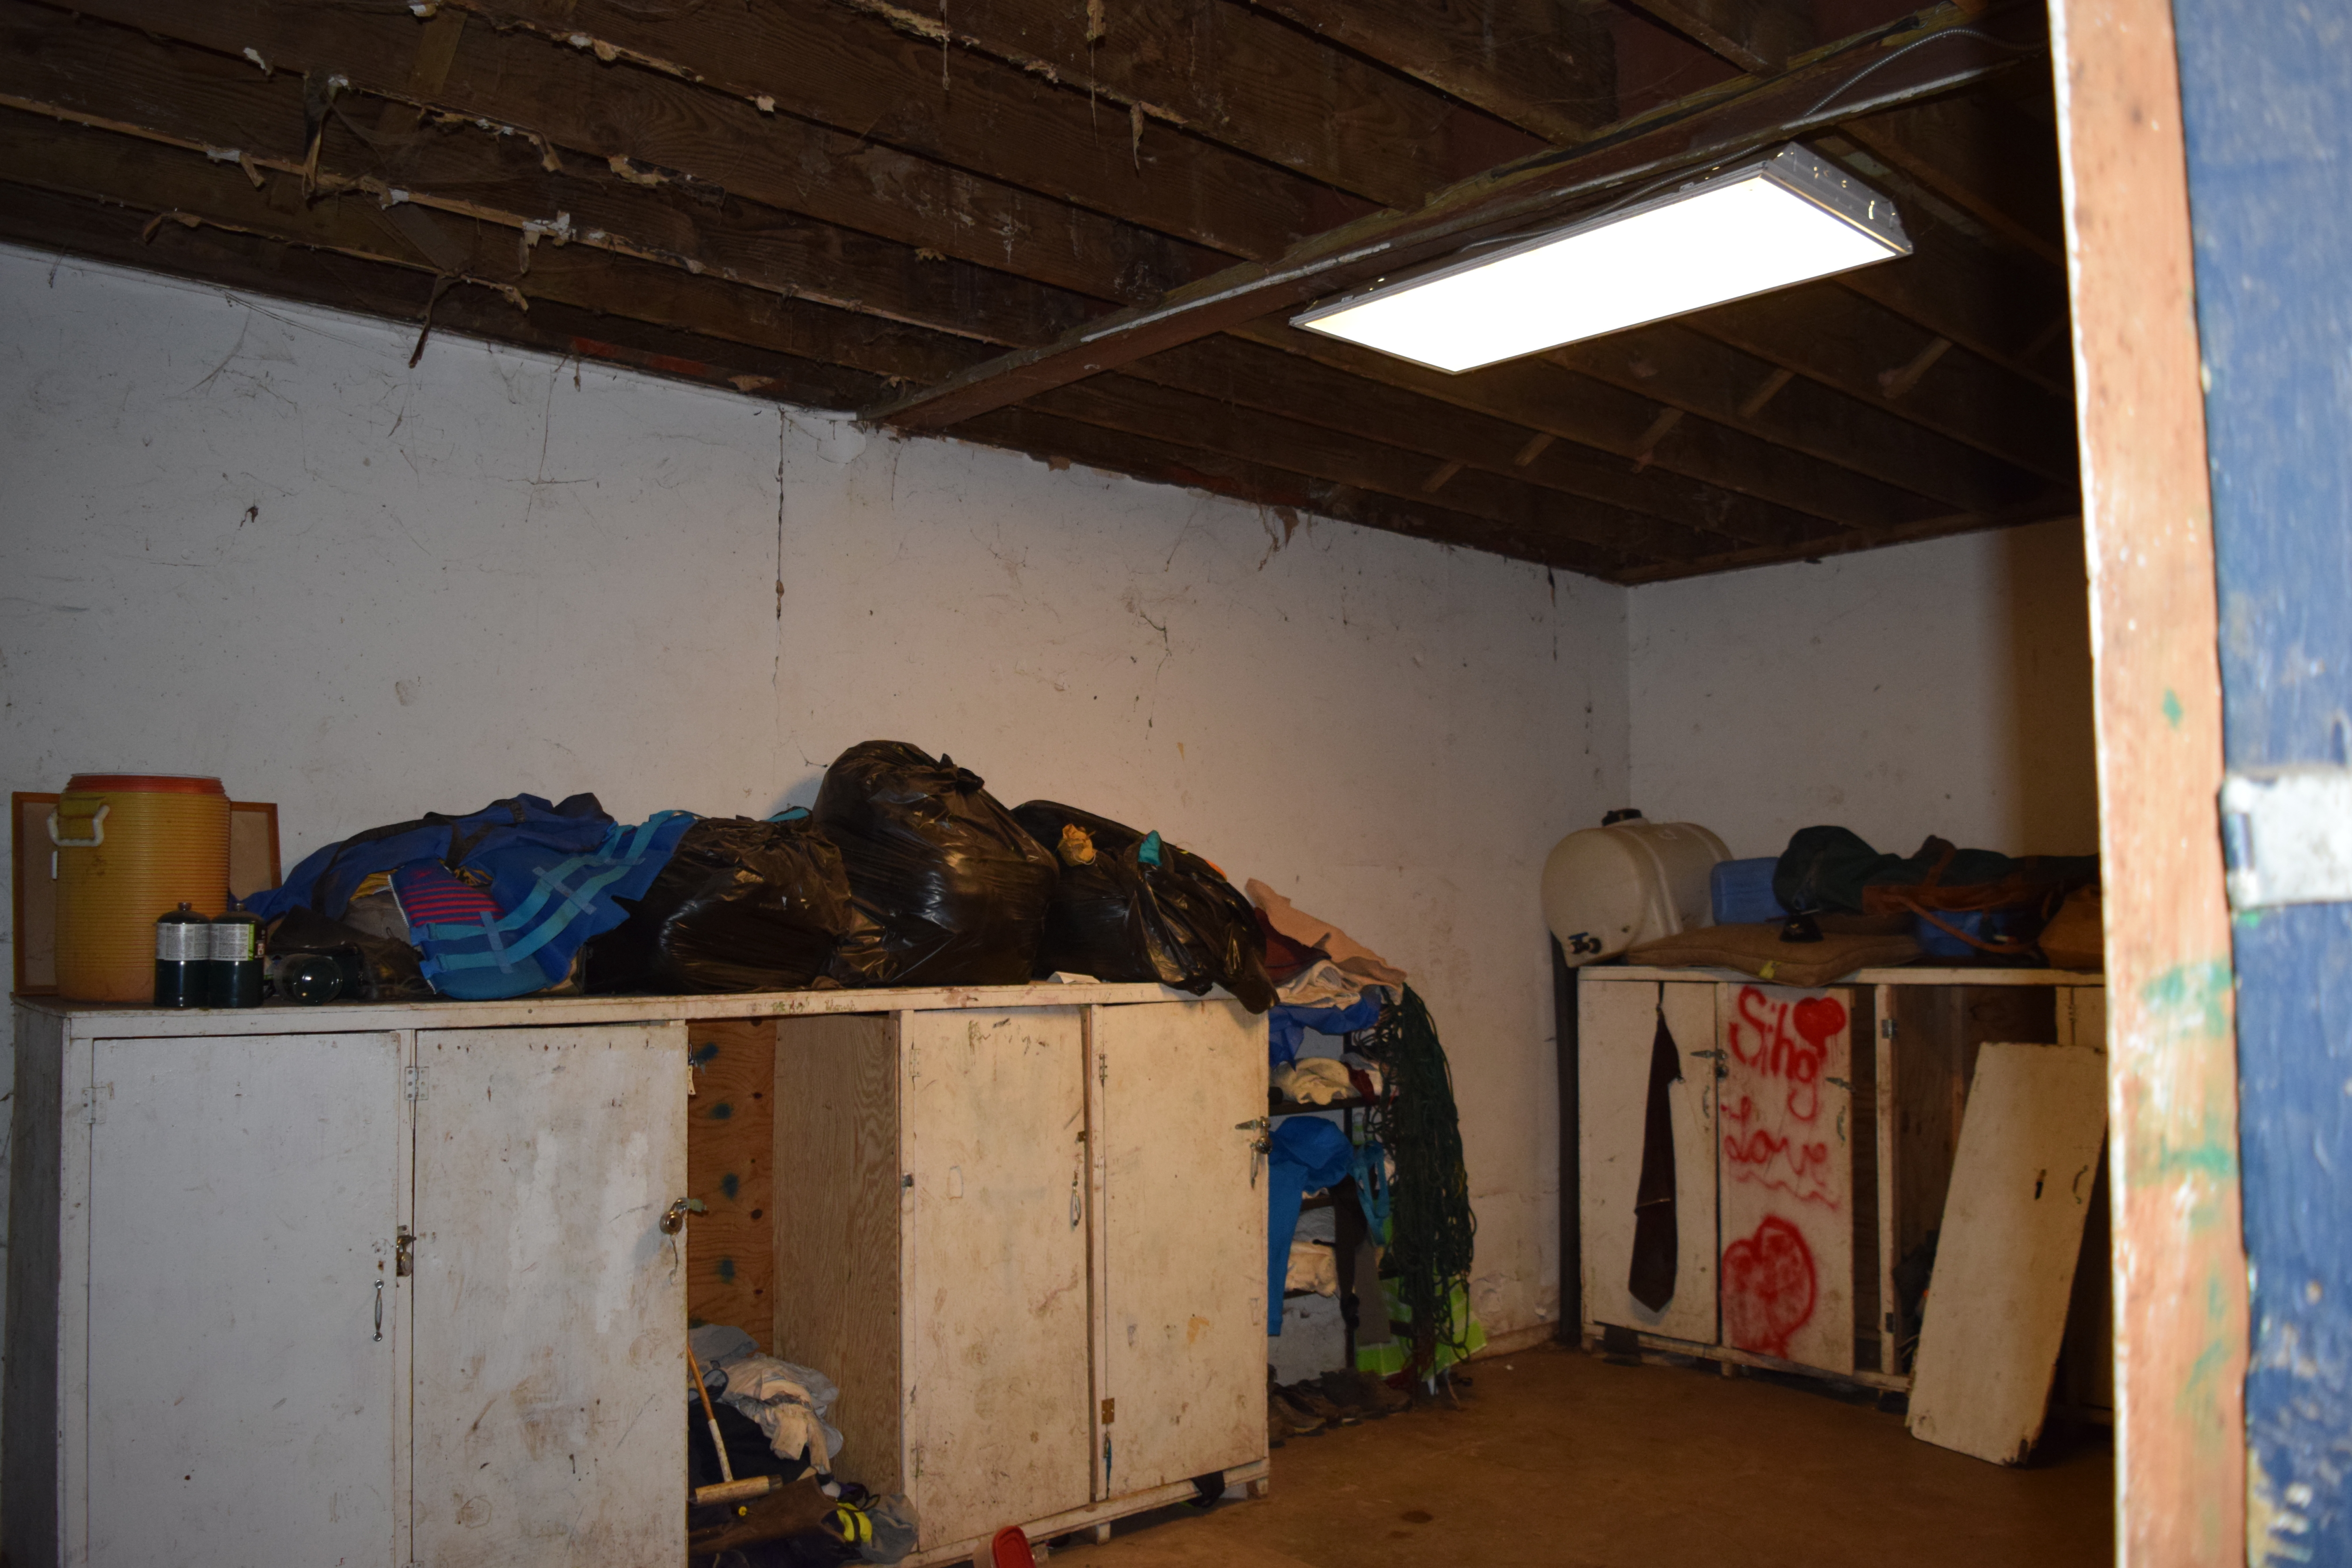 Storage Room Inside of Barn